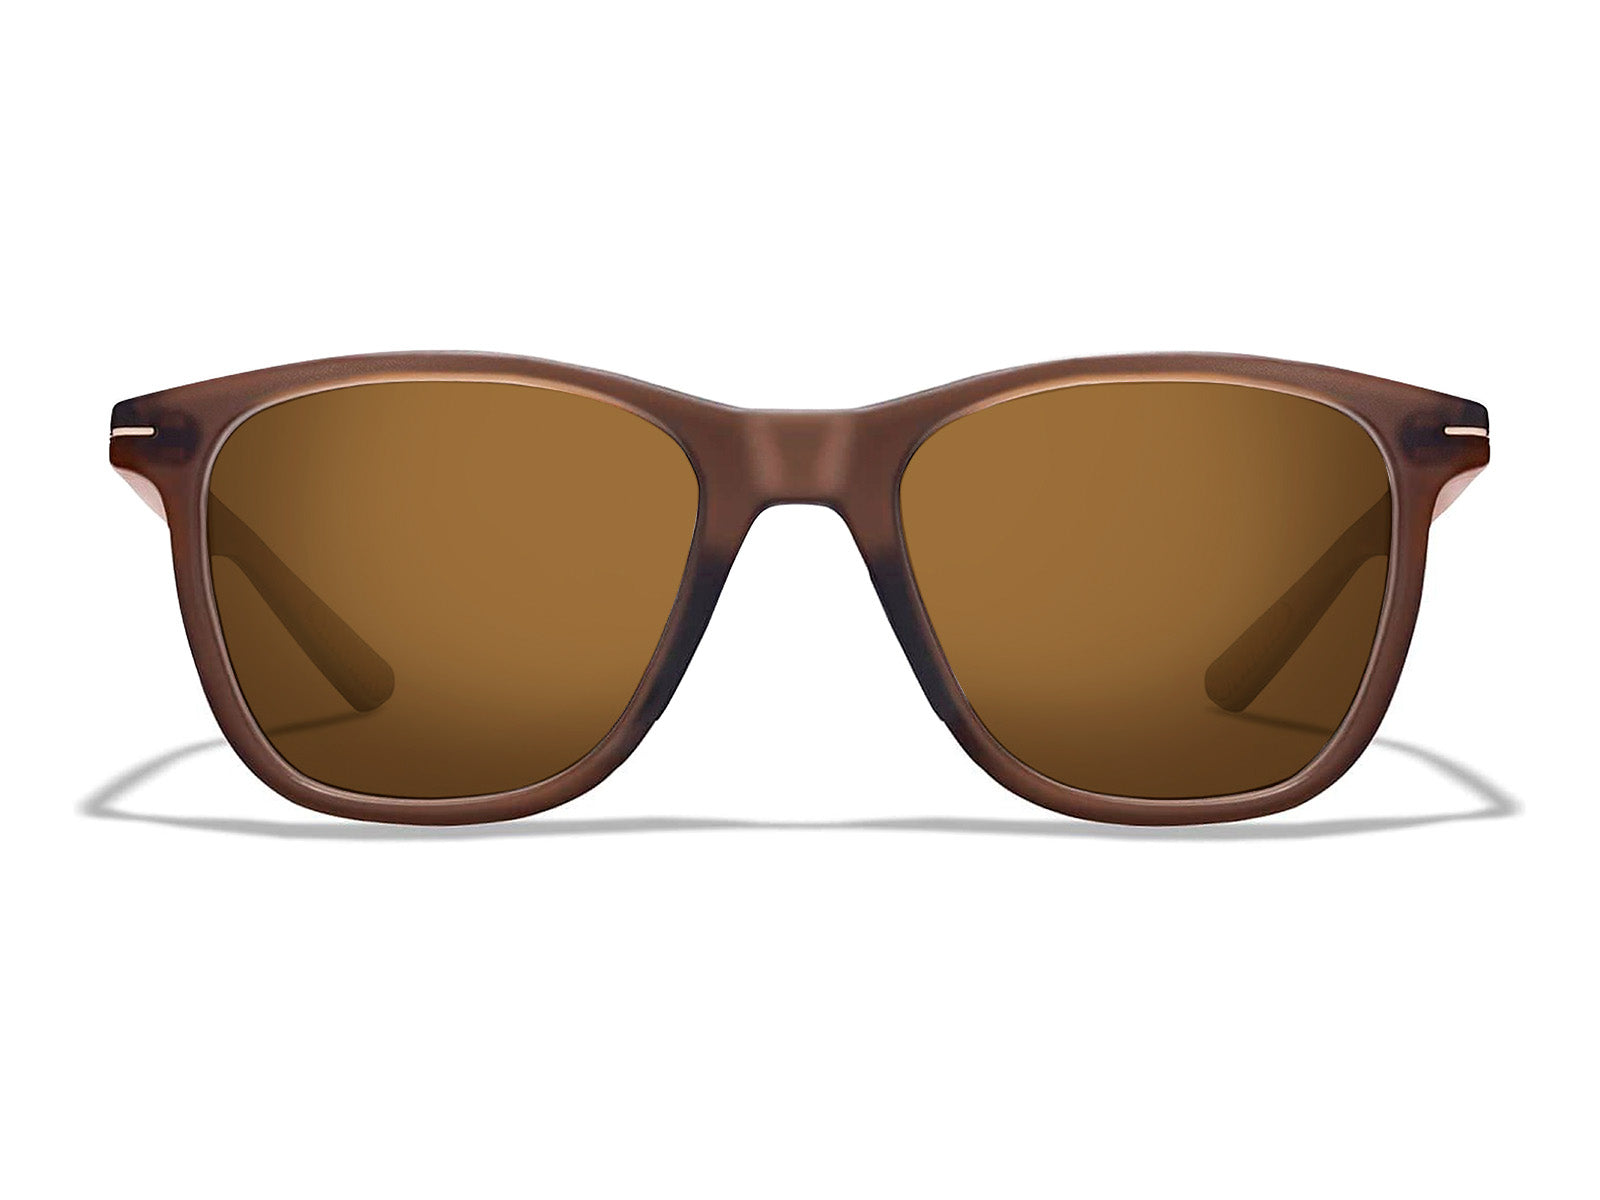 Roka Barton Sunglasses with Campfire Tortoise Frames - Bronze (Polarized) Lens